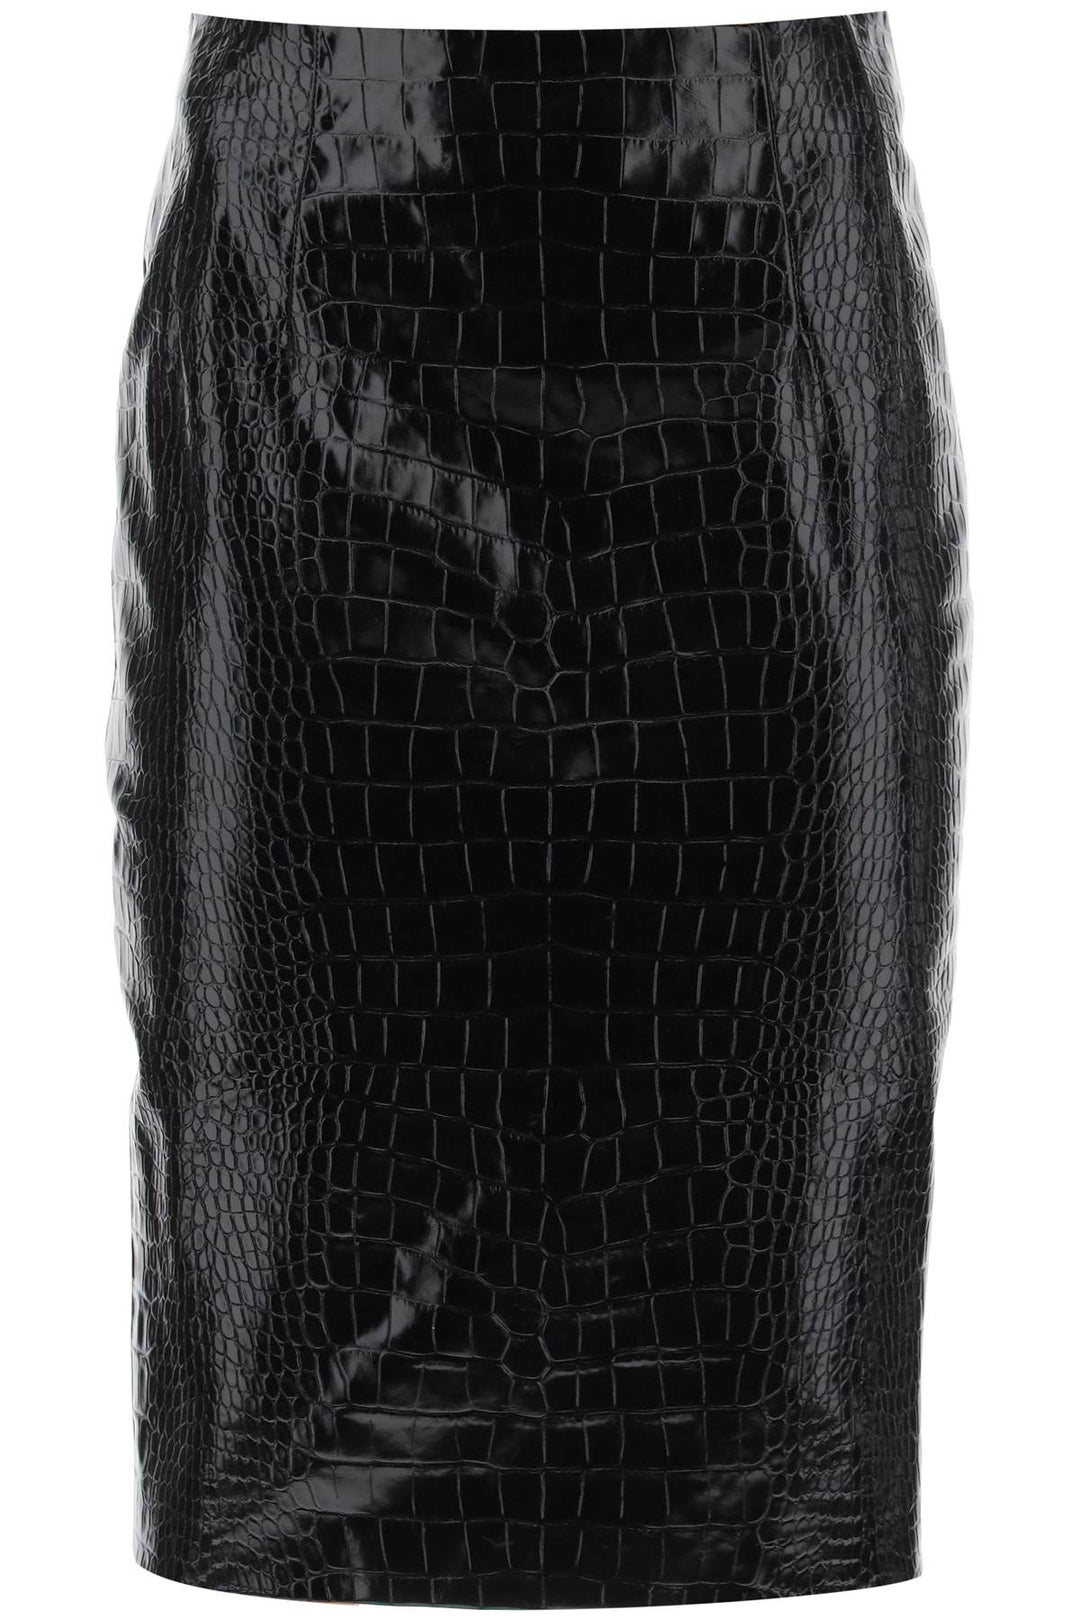 Versace Croco Effect Leather Pencil Skirt   Nero